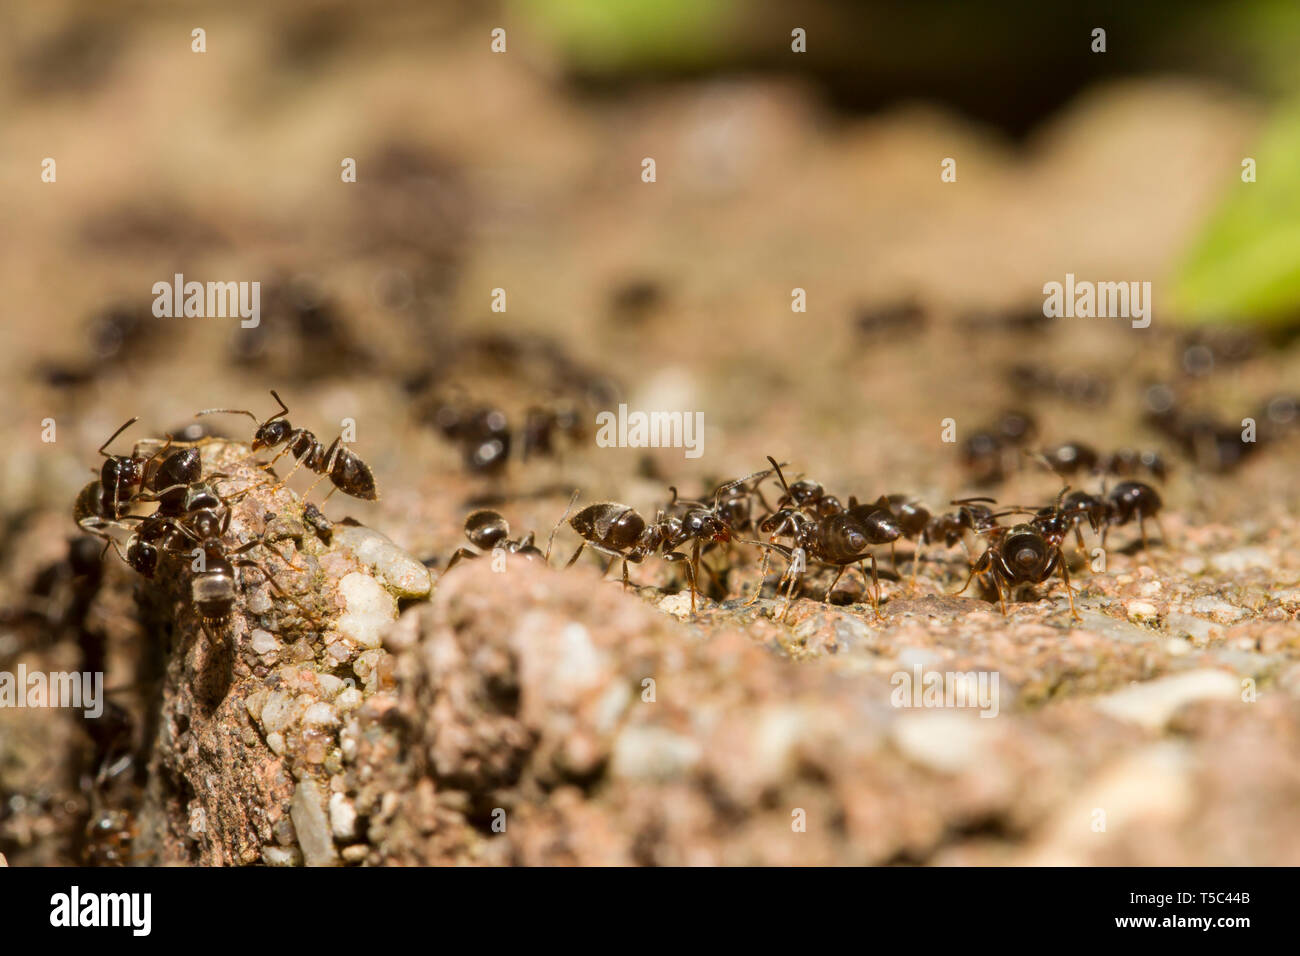 Ameisen, Formicidae, Ants Stock Photo